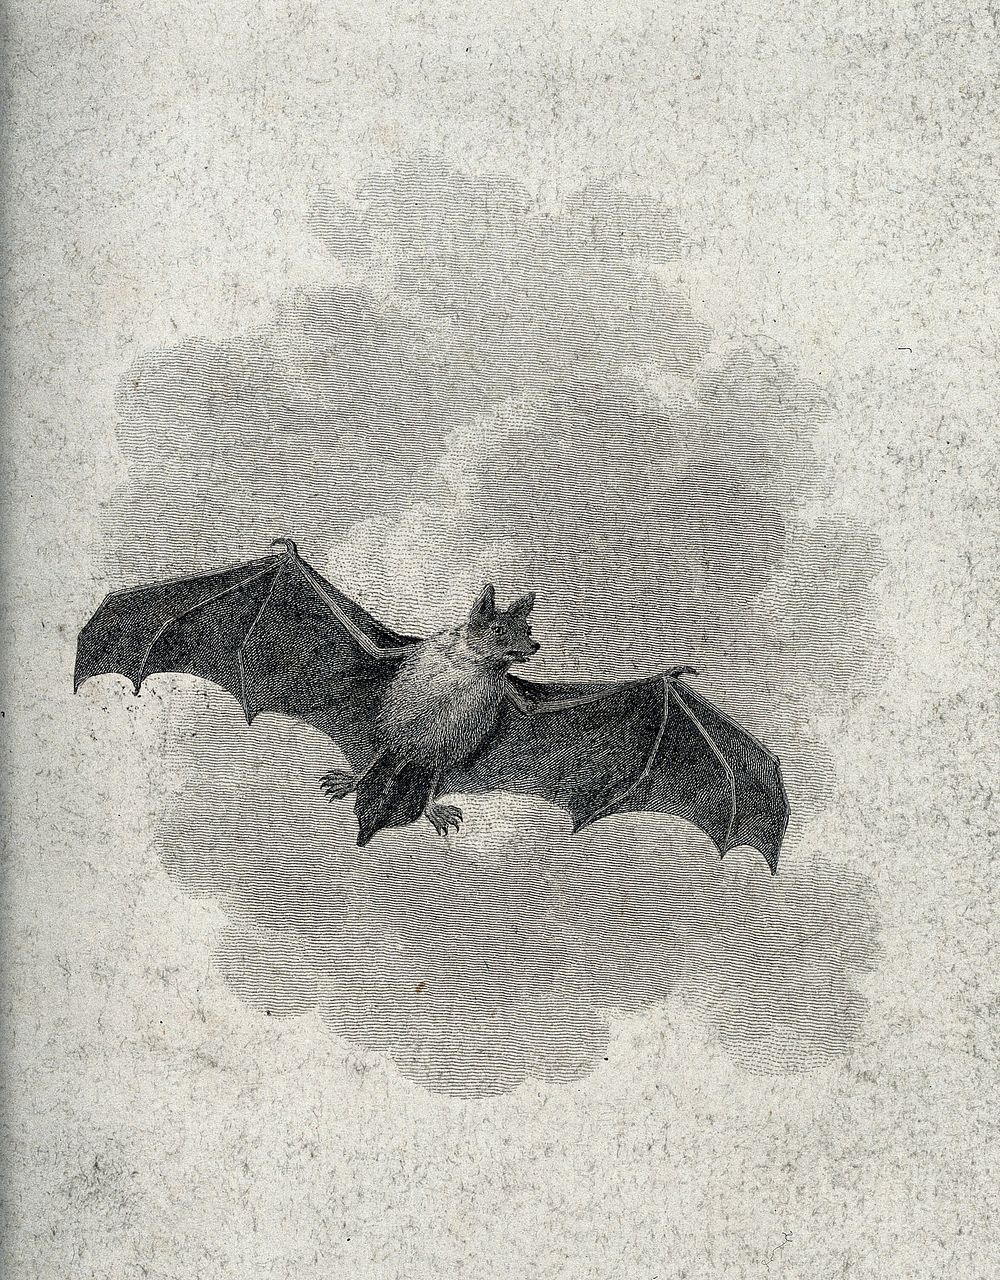 A flying short eared bat. Etching.